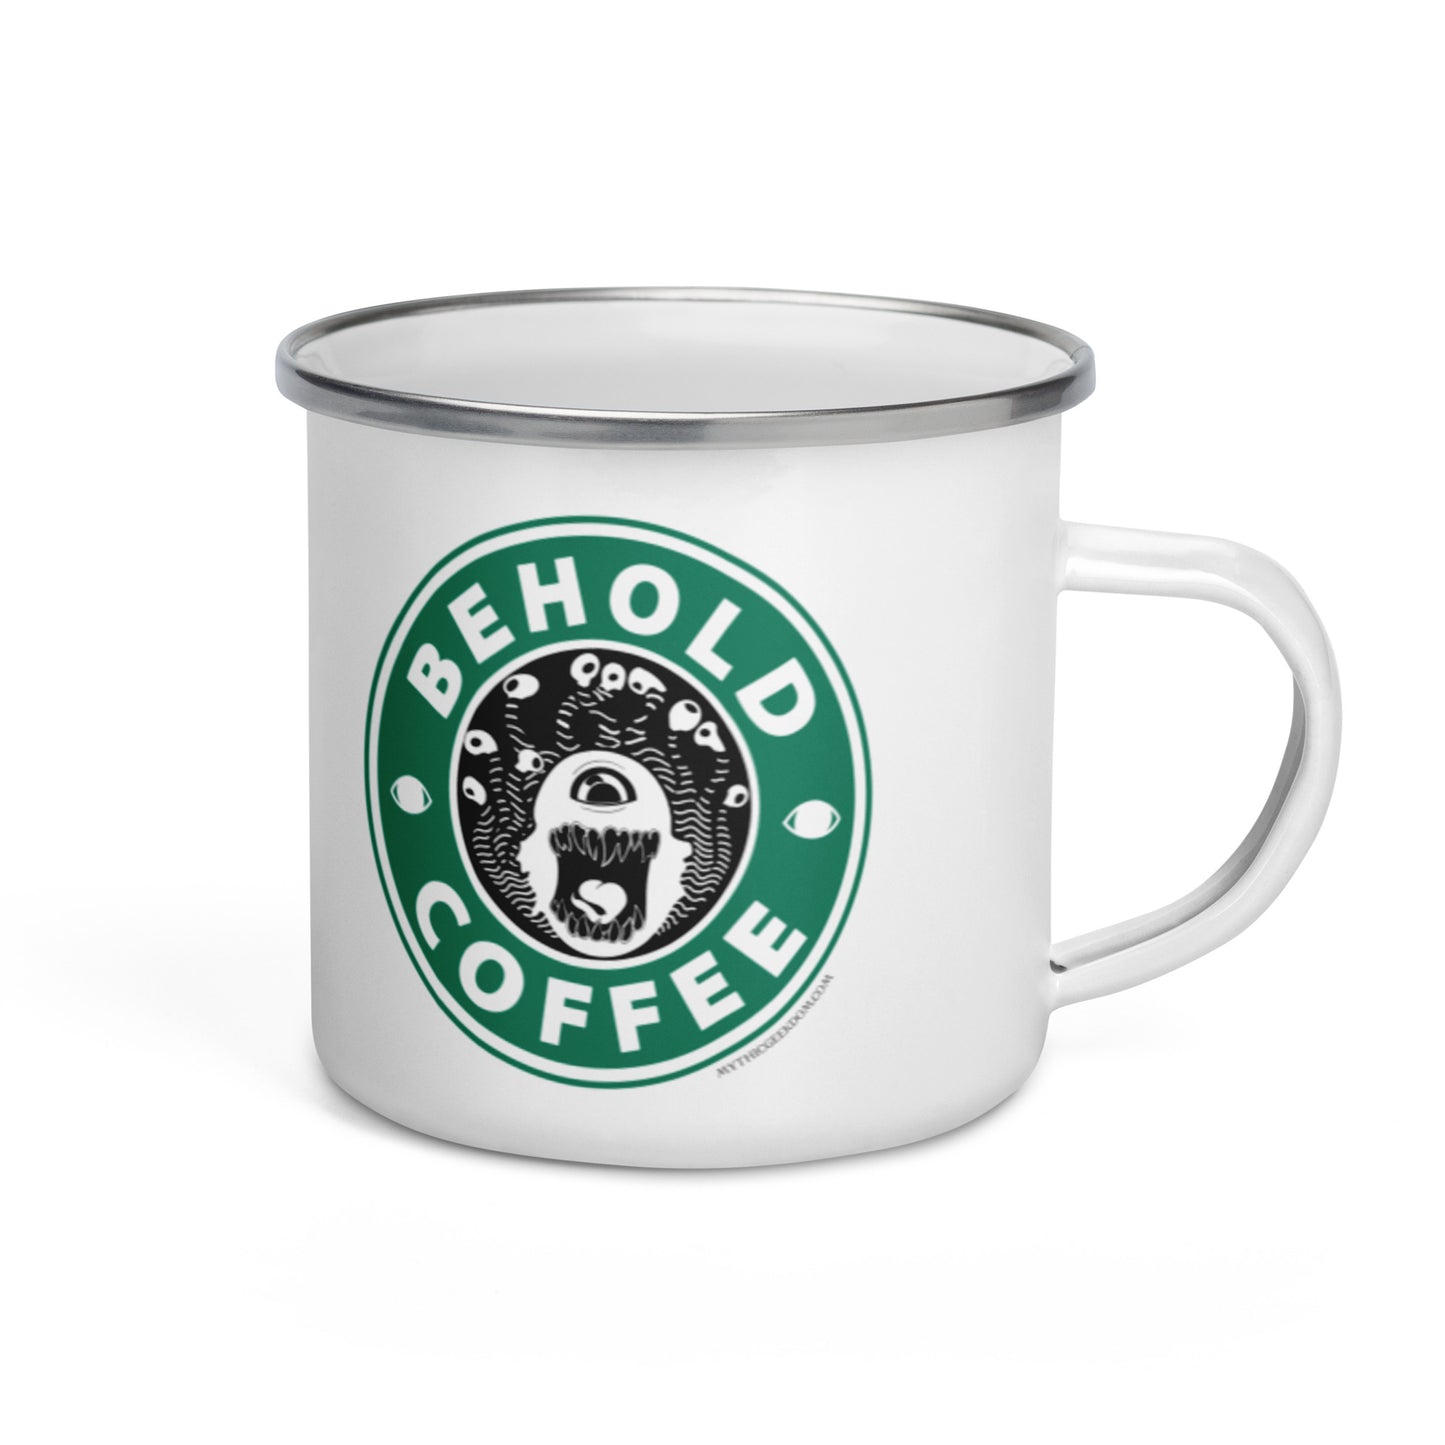 “Behold: Coffee” Camper Mug